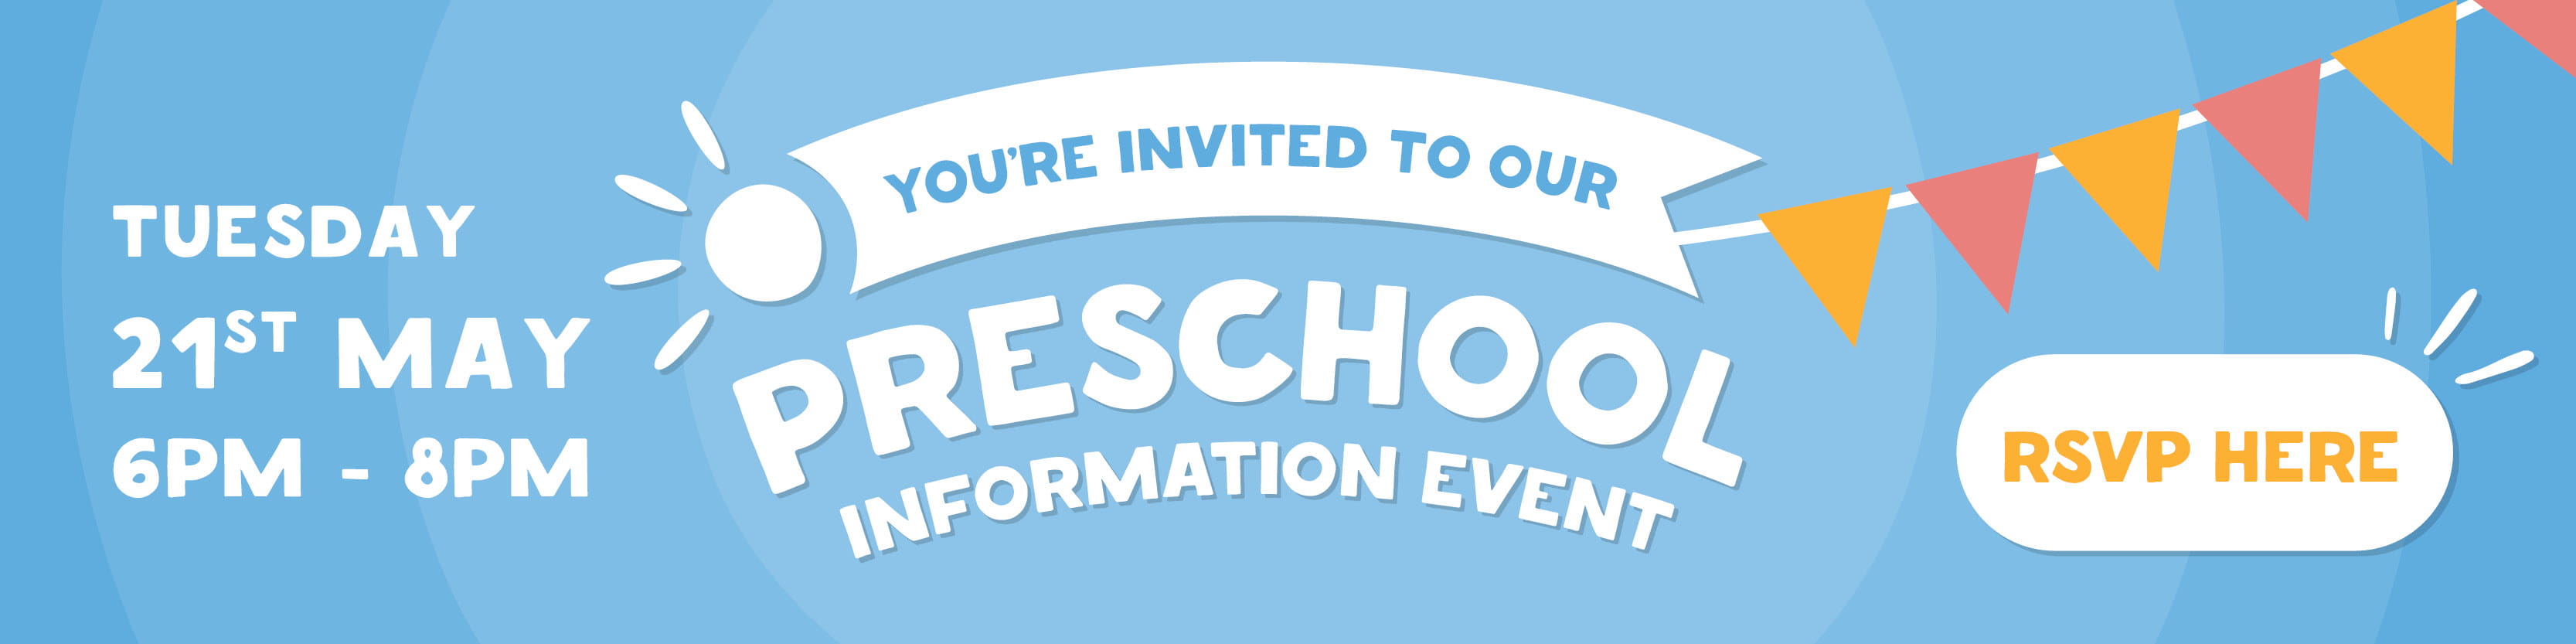 Register to attend our preschool information night